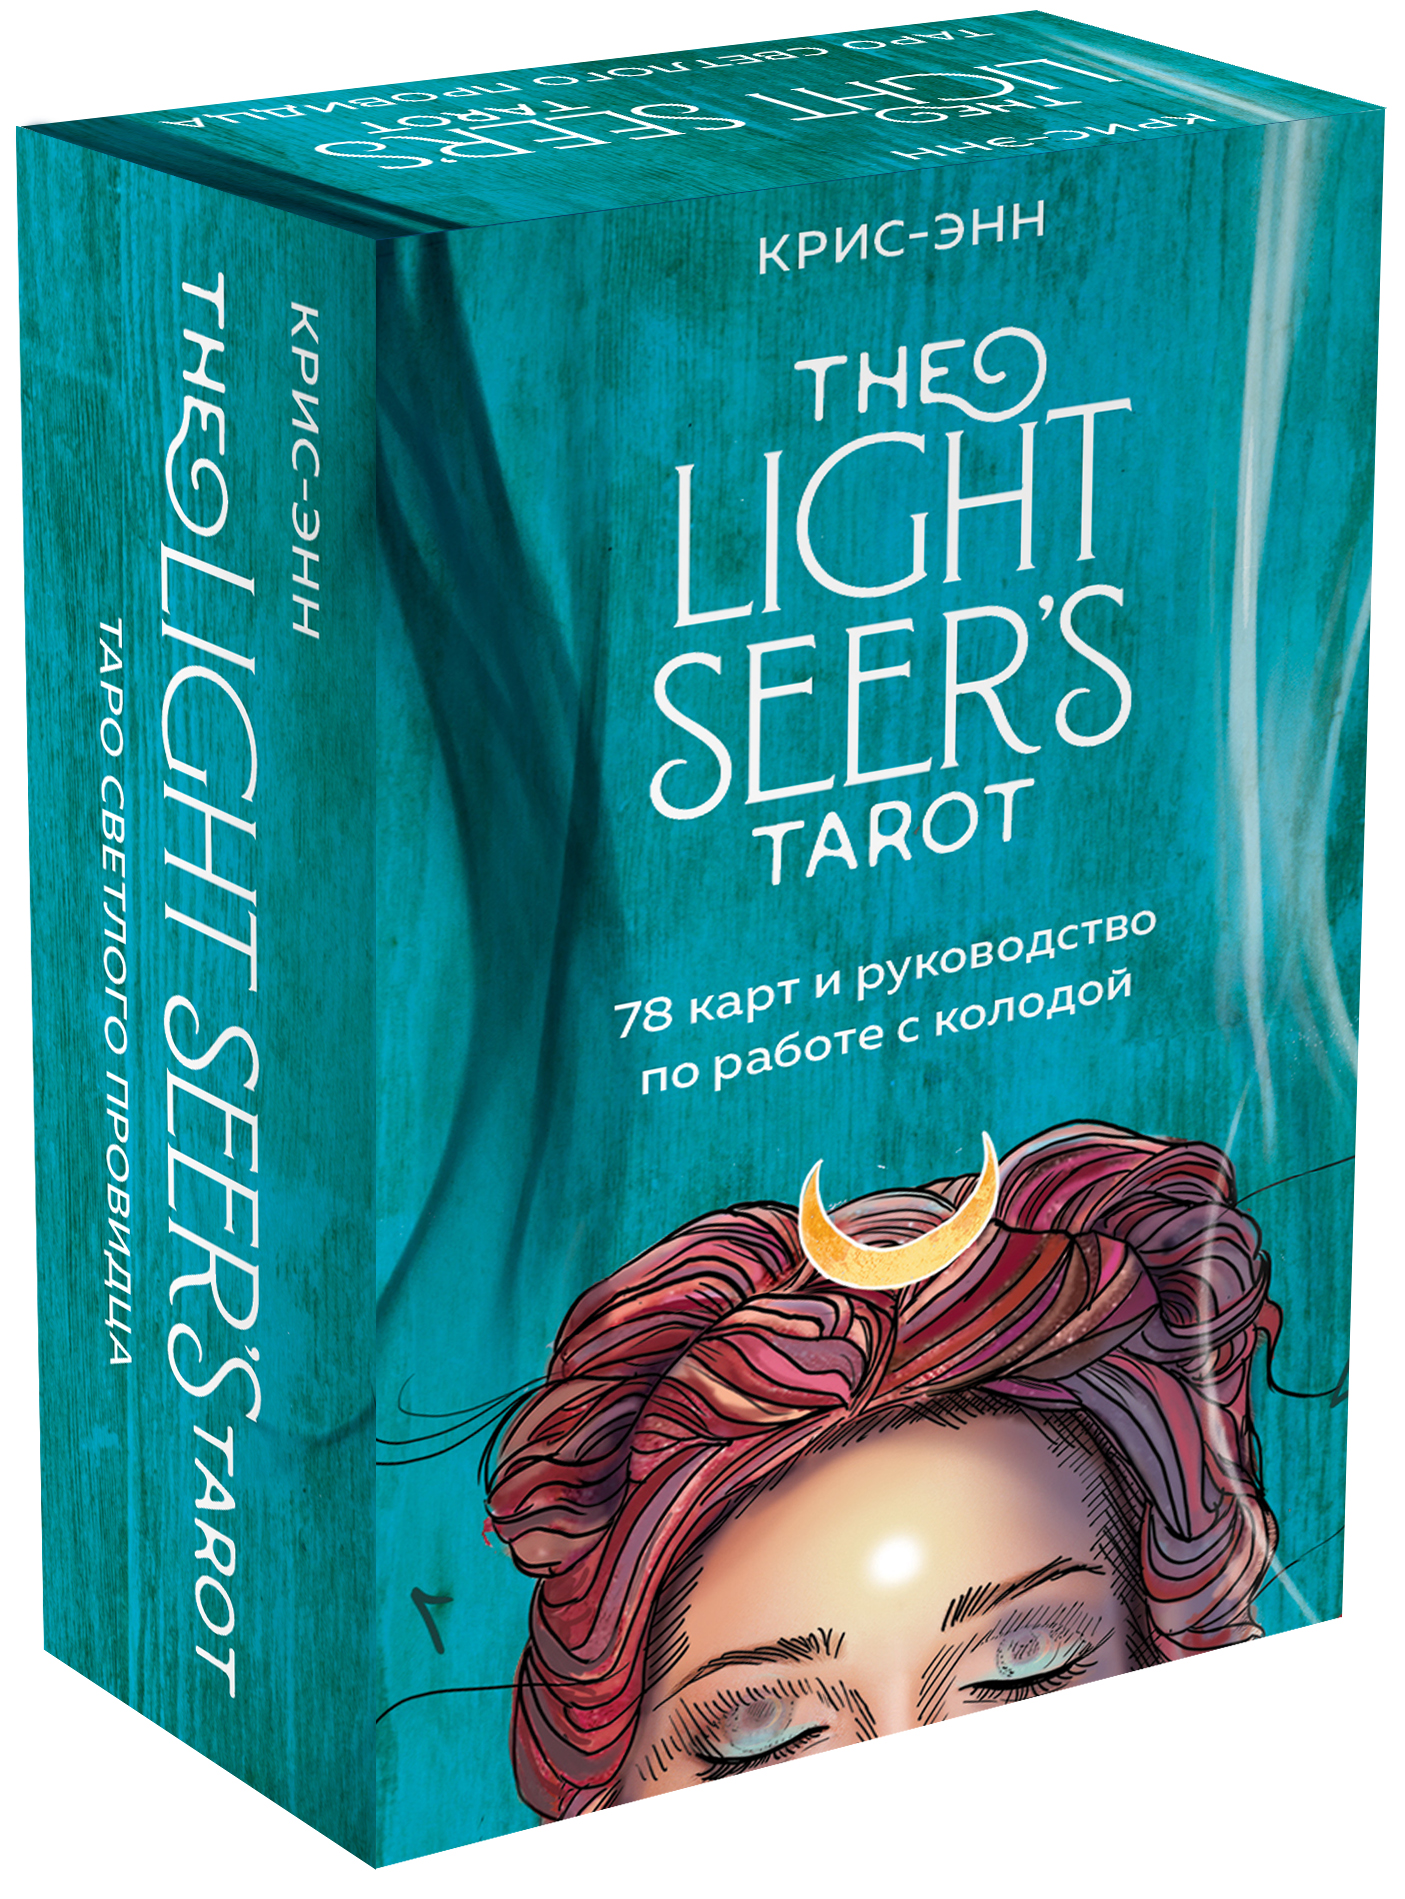 Light Seer's Tarot: Таро Светлого провидца (78 карт и руководство)